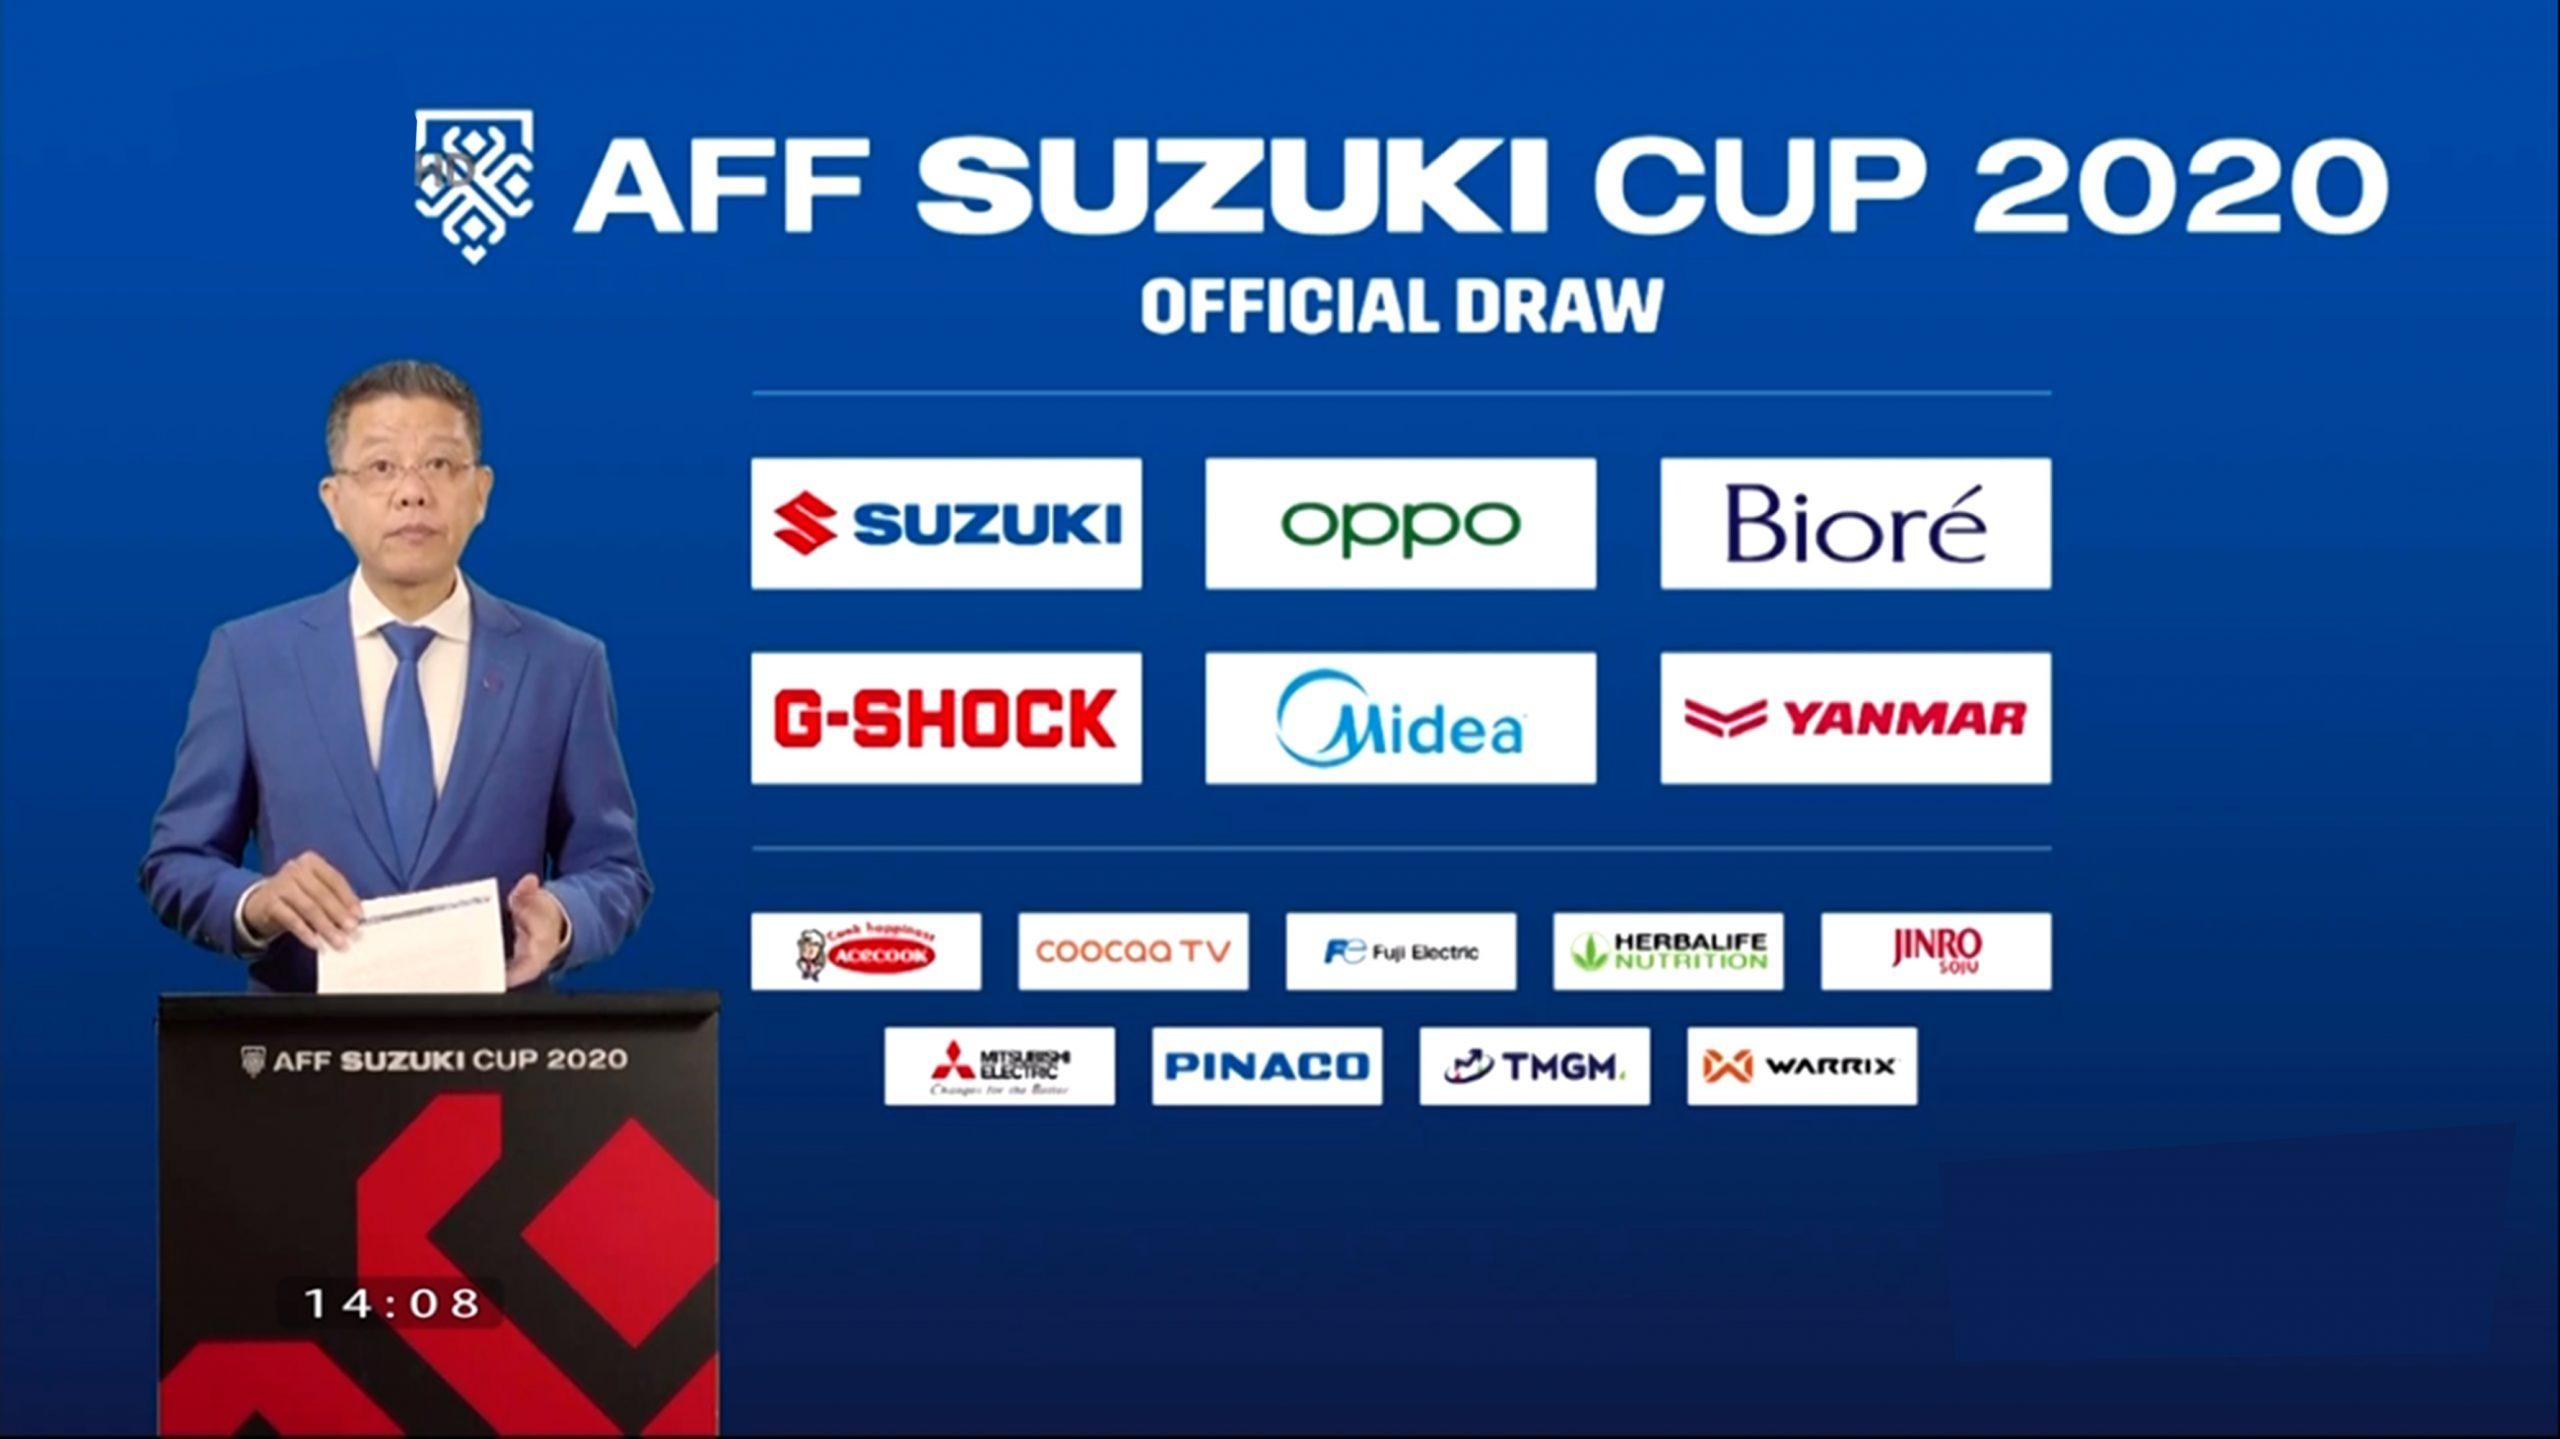 Ban tổ chức giải AFF Suzuki Cup 2020 tổ chức bốc thăm trực tuyến (Nguồn: Internet).